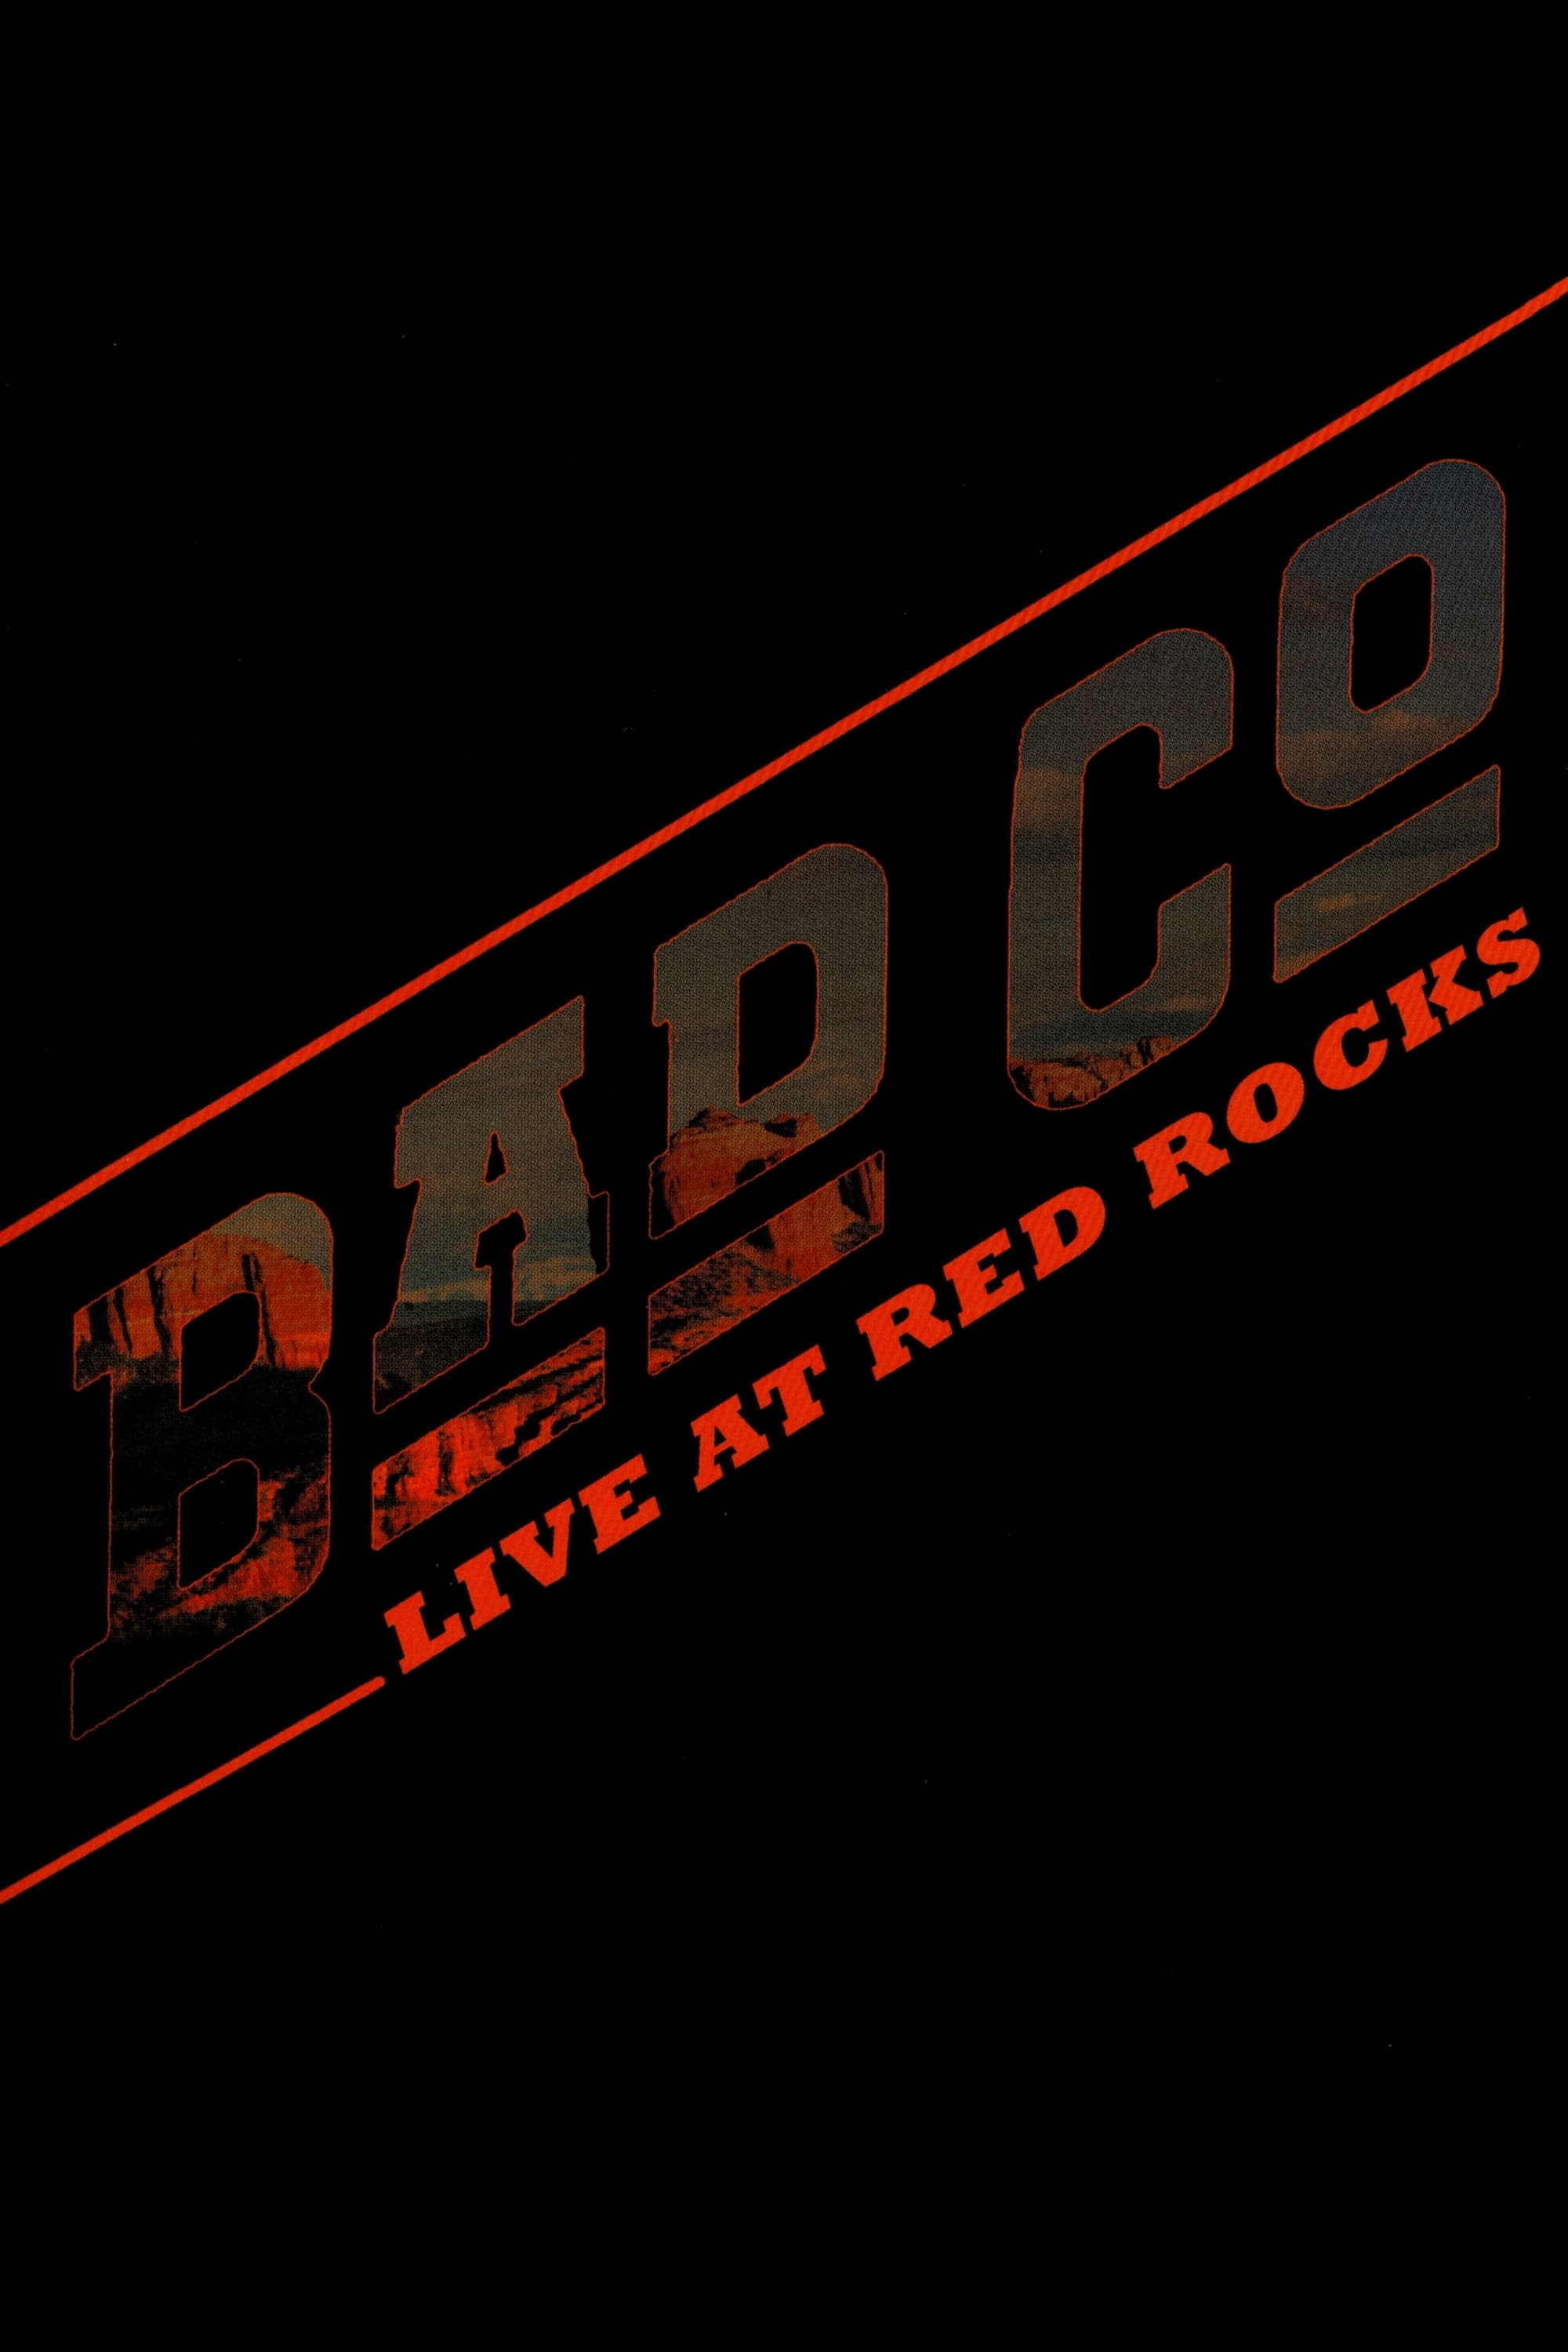 Bad Company - Live at Red Rocks